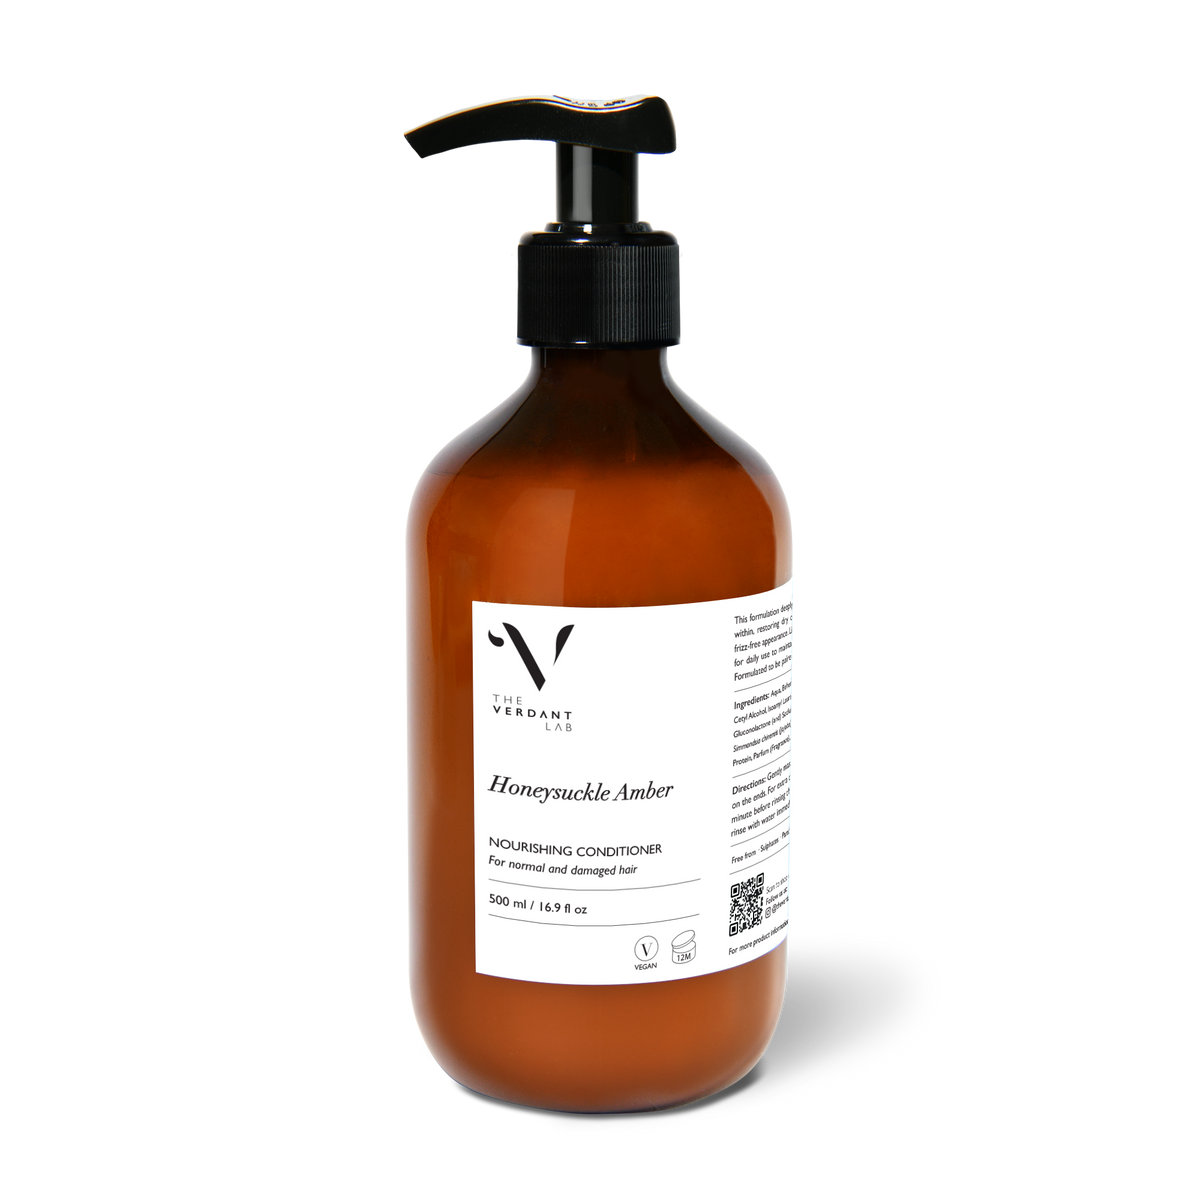 The Verdant Lab Honeysuckle Amber Nourishing Conditioner